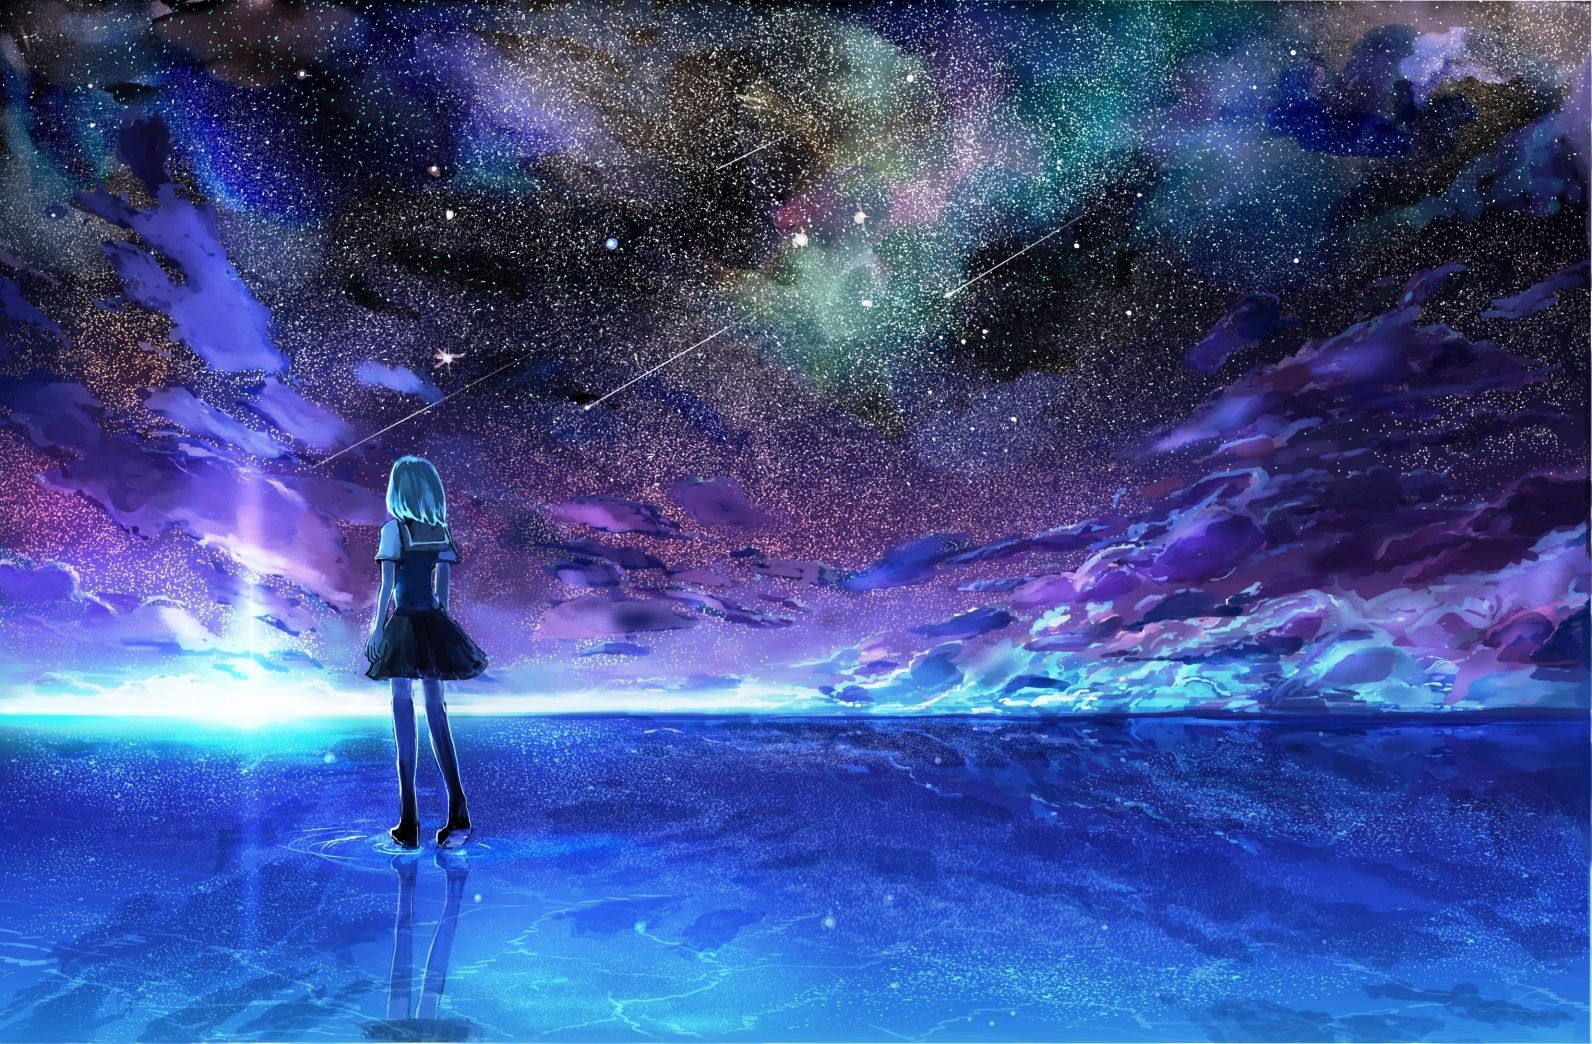 Anime Night Sky Background